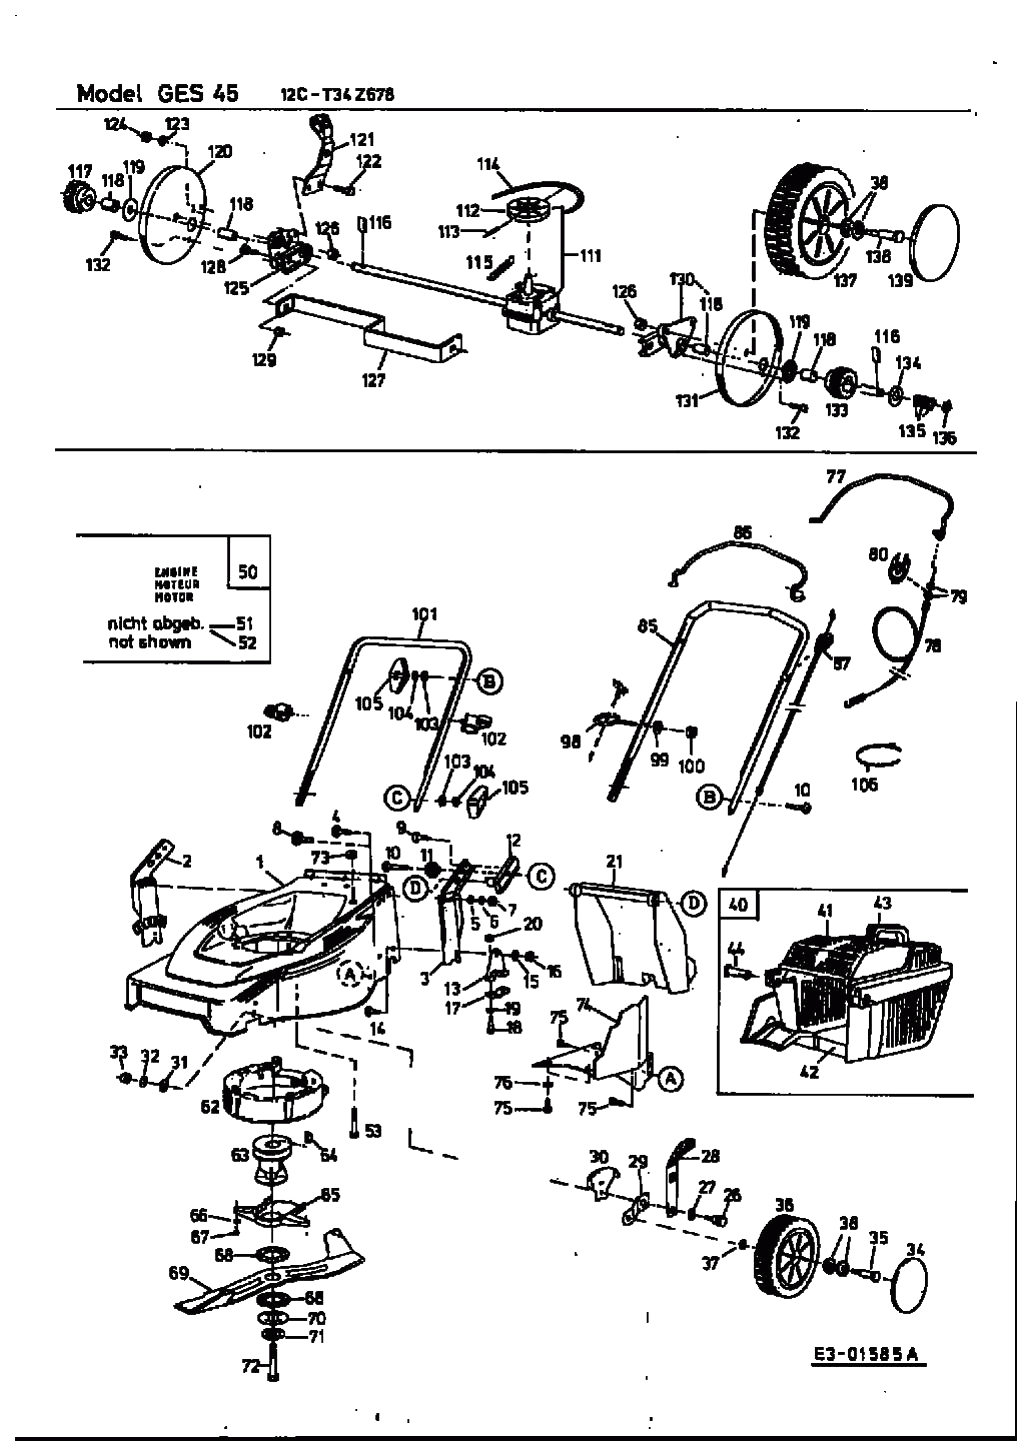 MTD Артикул 12C-T34Z678 (год выпуска 2001). Основная деталировка